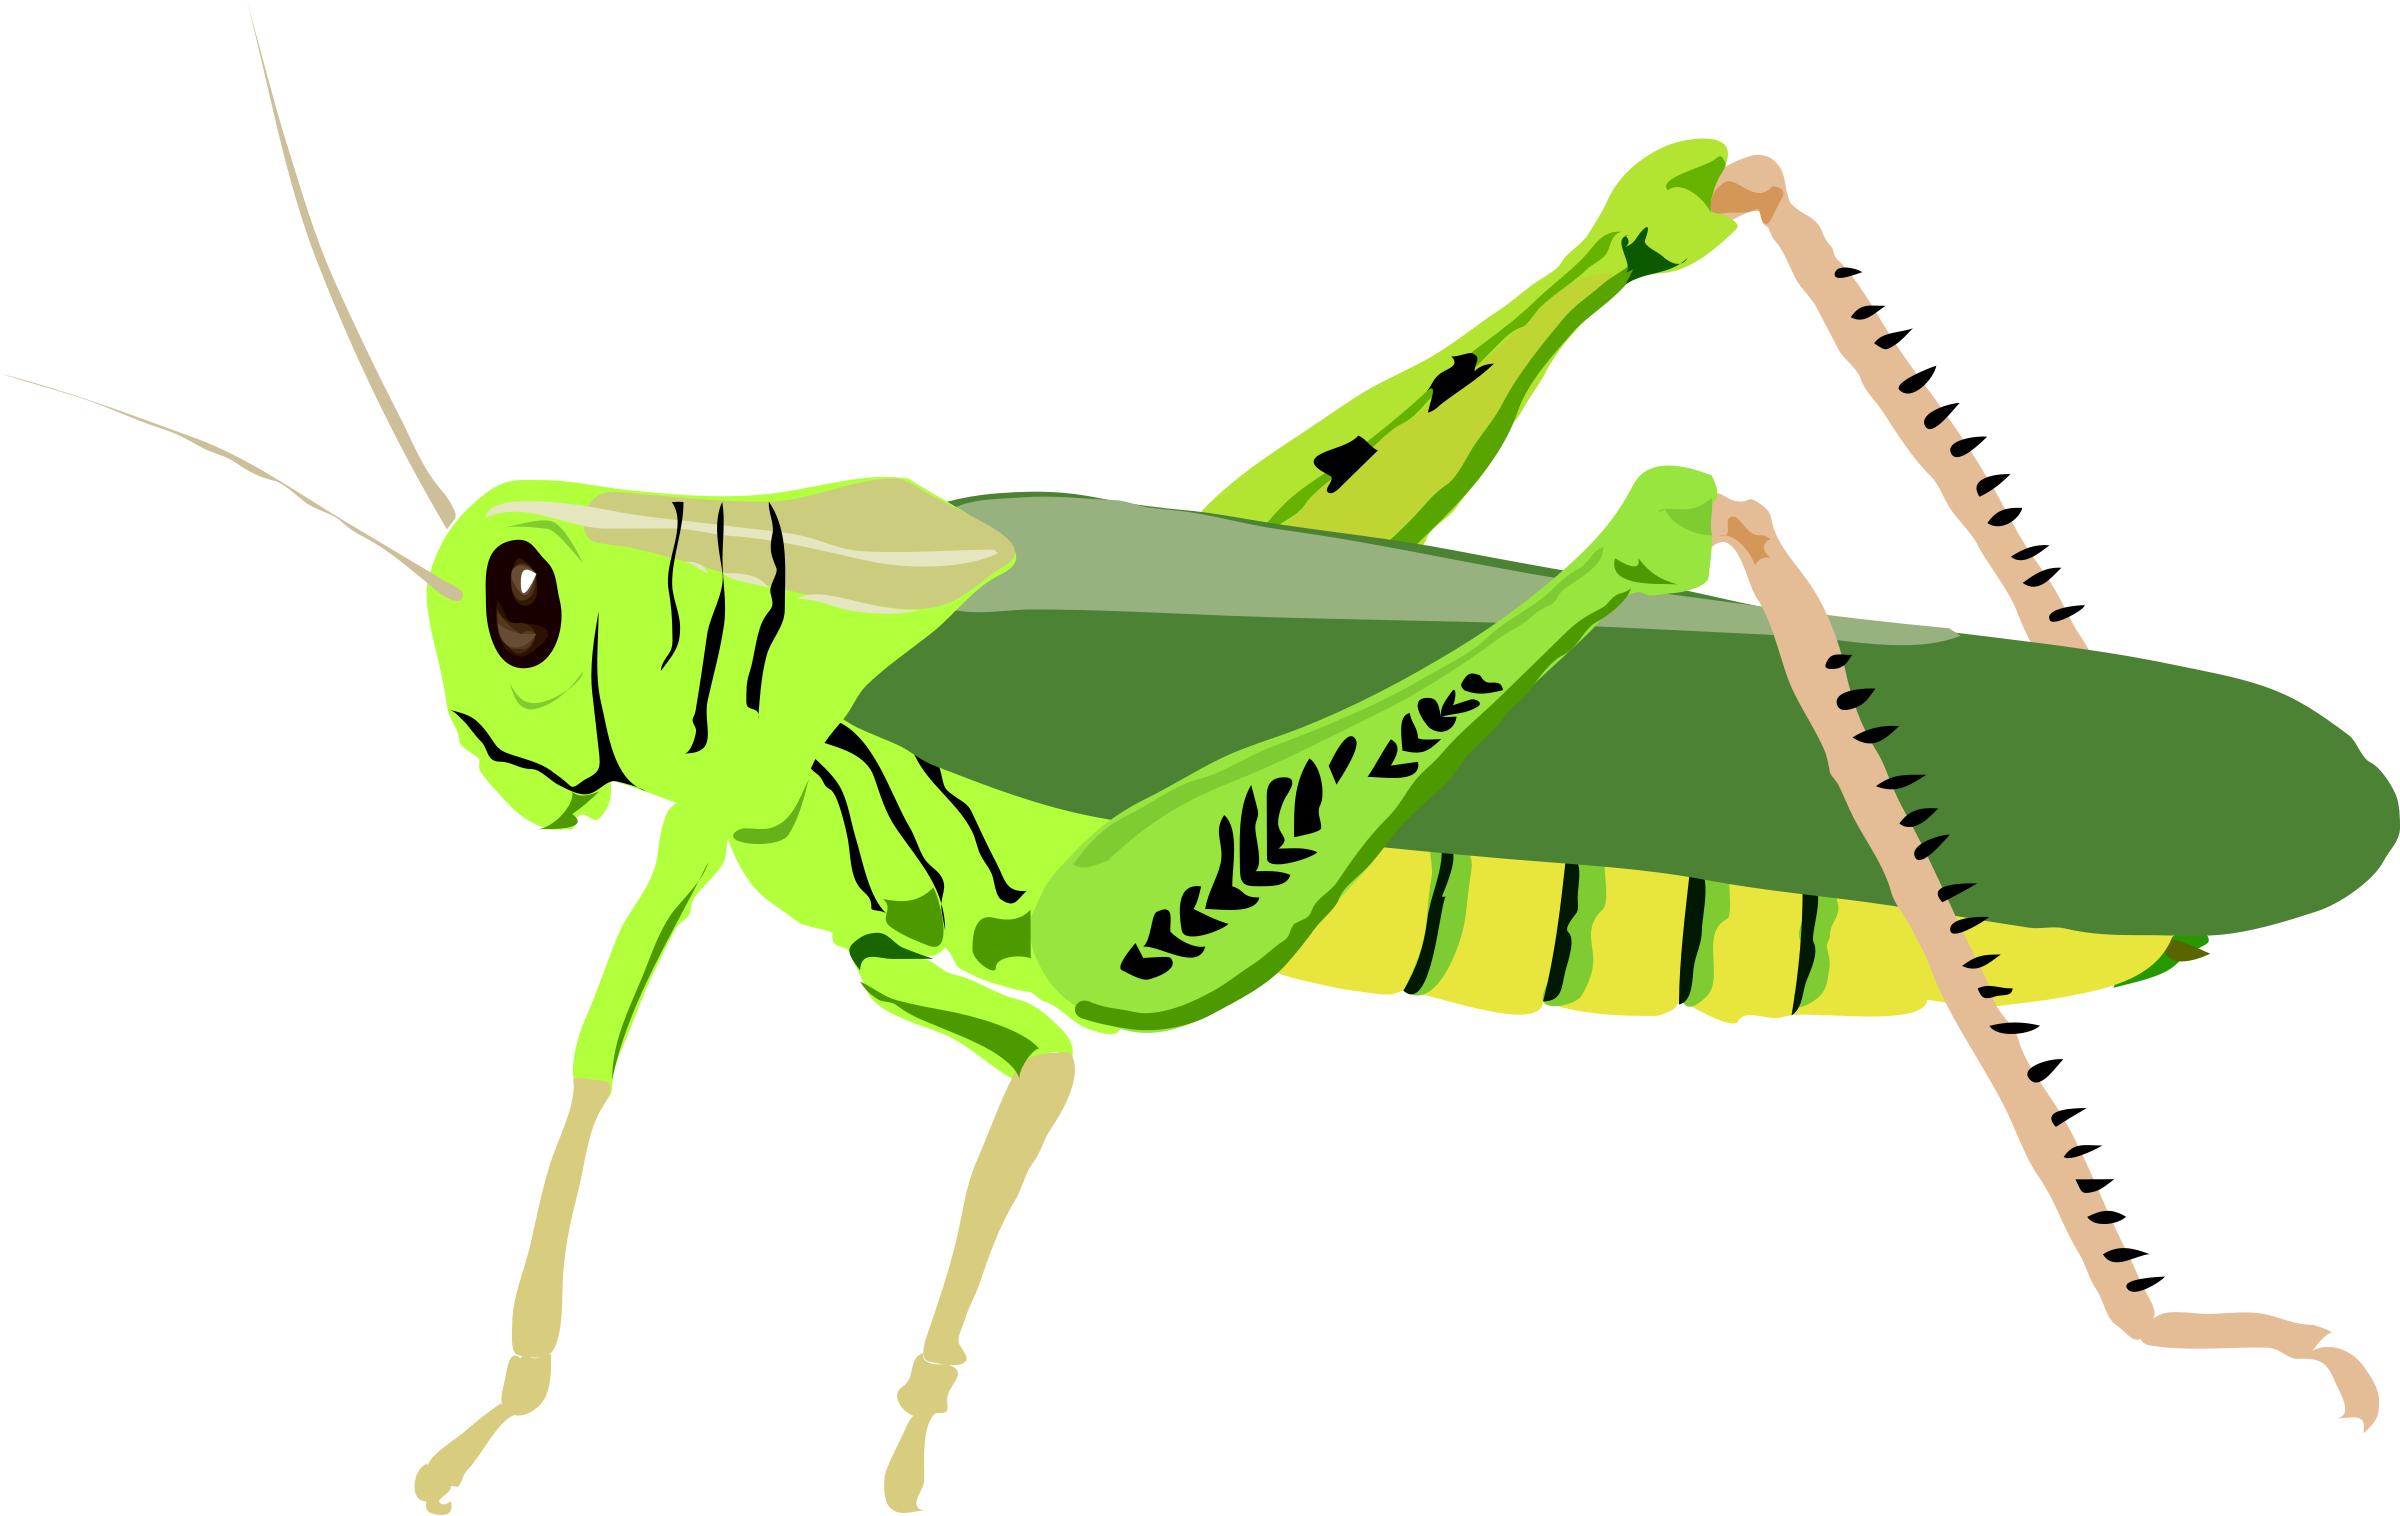 Grasshopper clipart images free